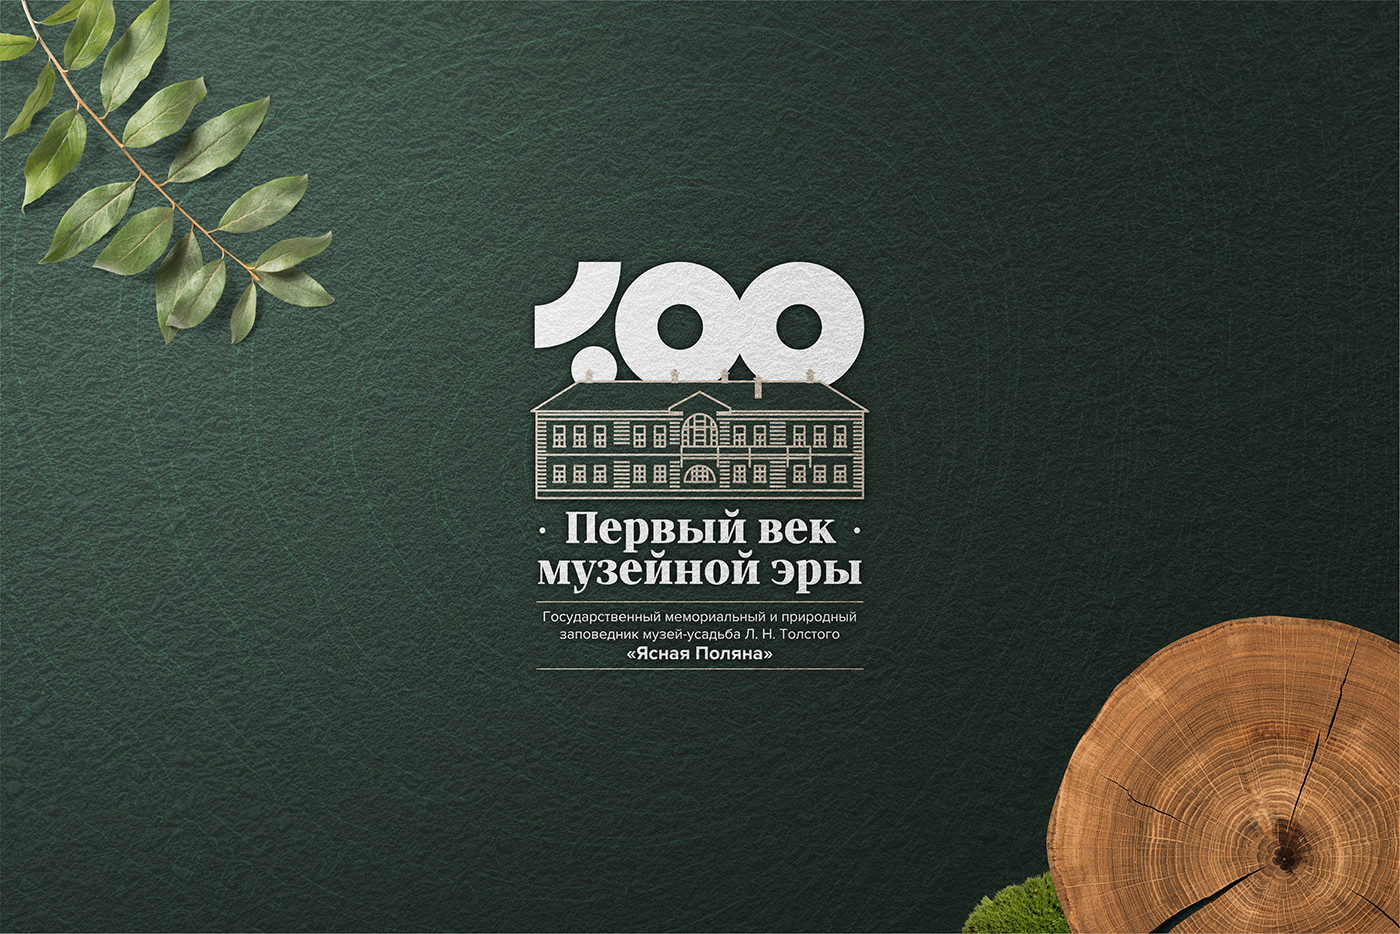 anniversary Exhibition  logo museum tolstoy Tula Russia Yasnaya Polyana